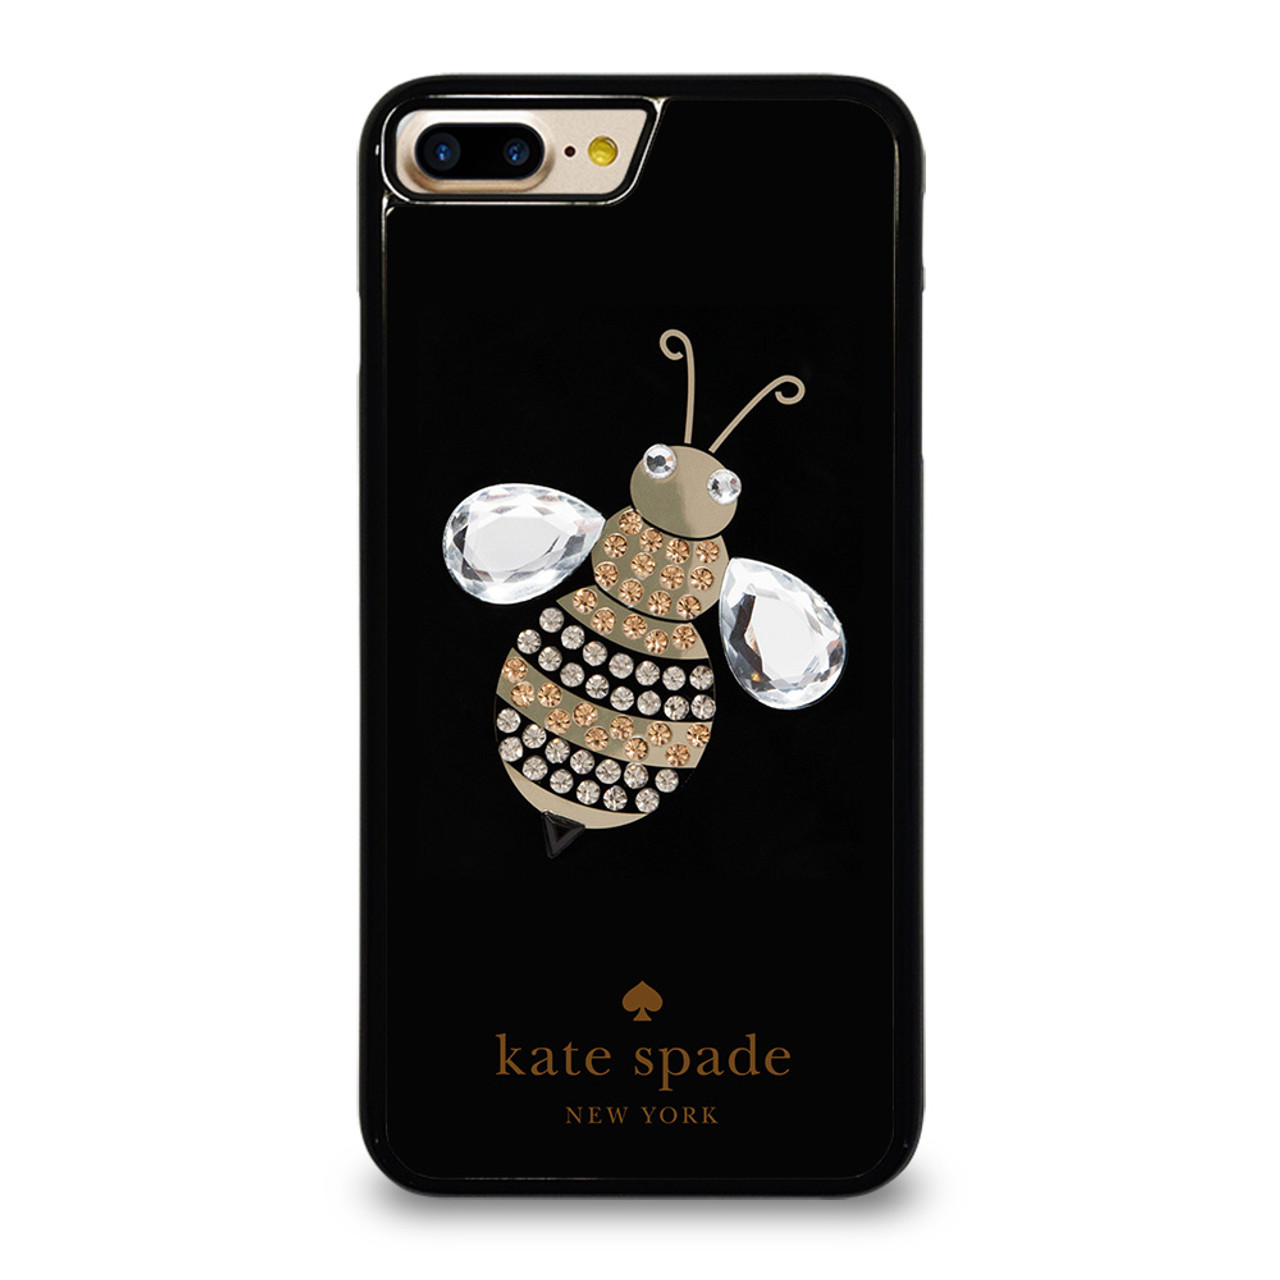 KATE SPADE DIAMOND BEE iPhone 7 8 Case Cover